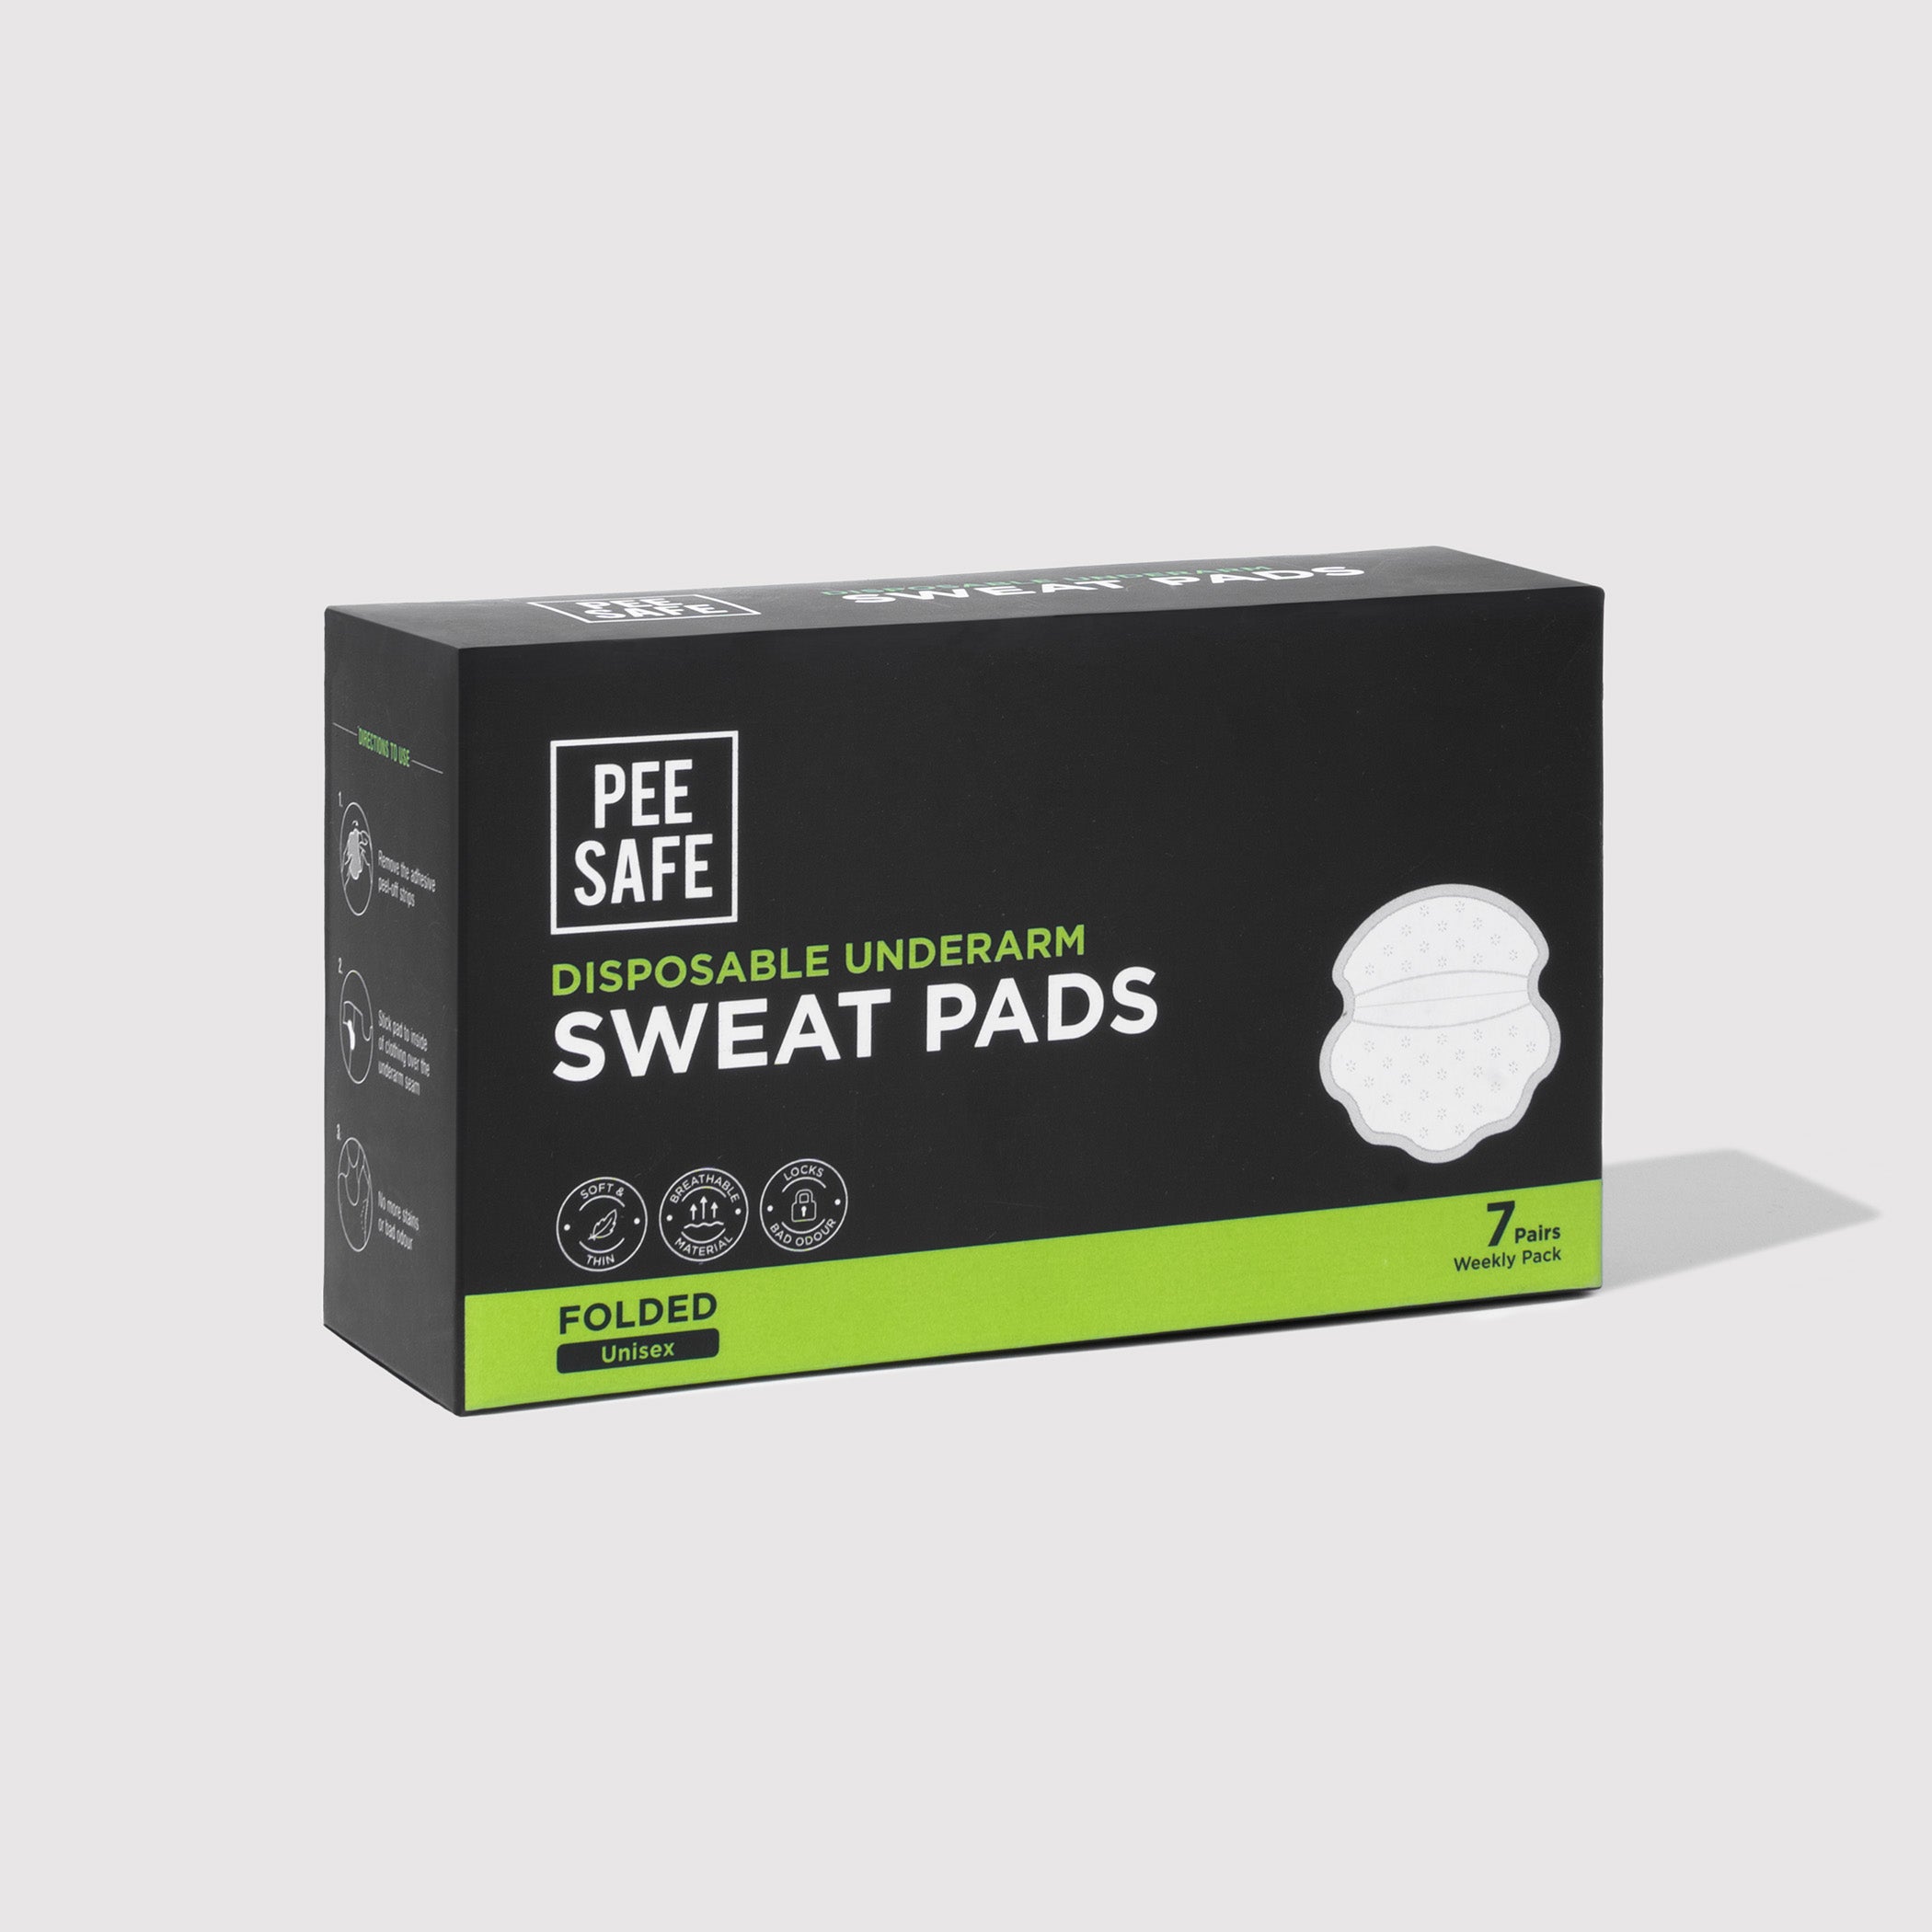 Pee Safe Disposable Underarm Sweat Pads (Folded) - 14 Pads